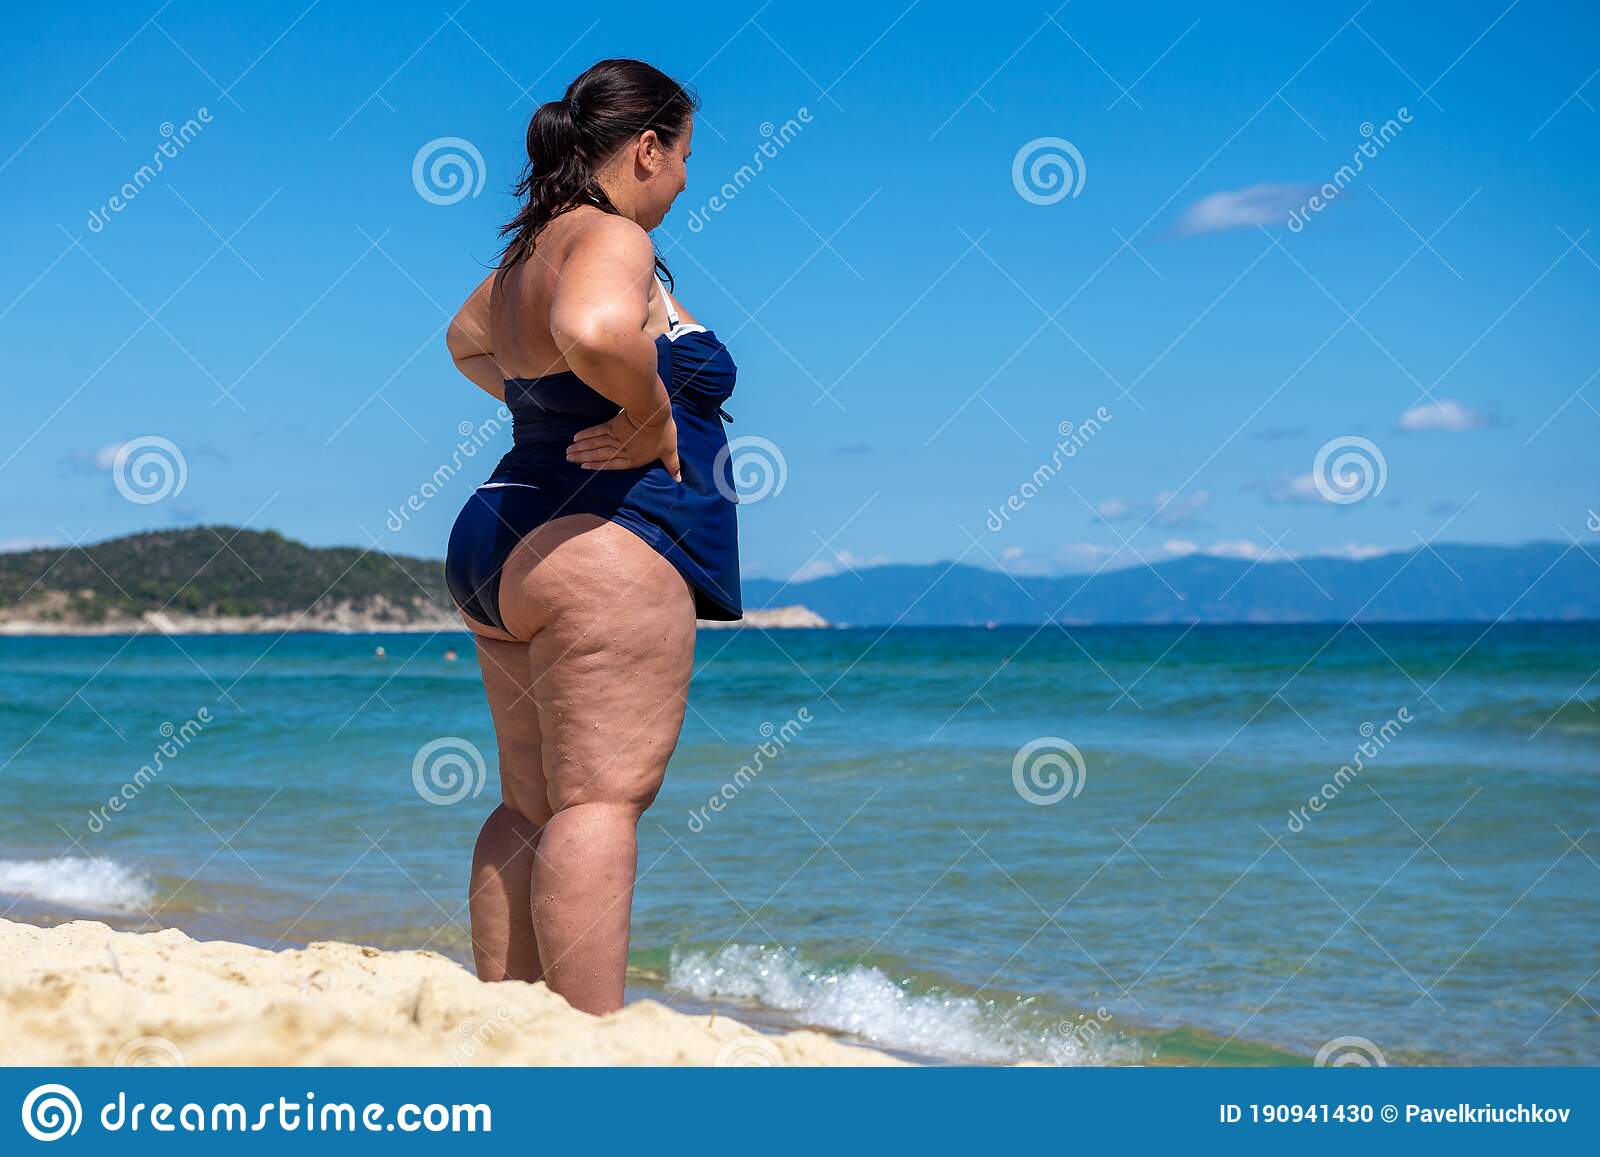 body-positive-happy-fat-woman-beach-body-positive-happy-fat-woman-beach-full-length-photo-back...jpg